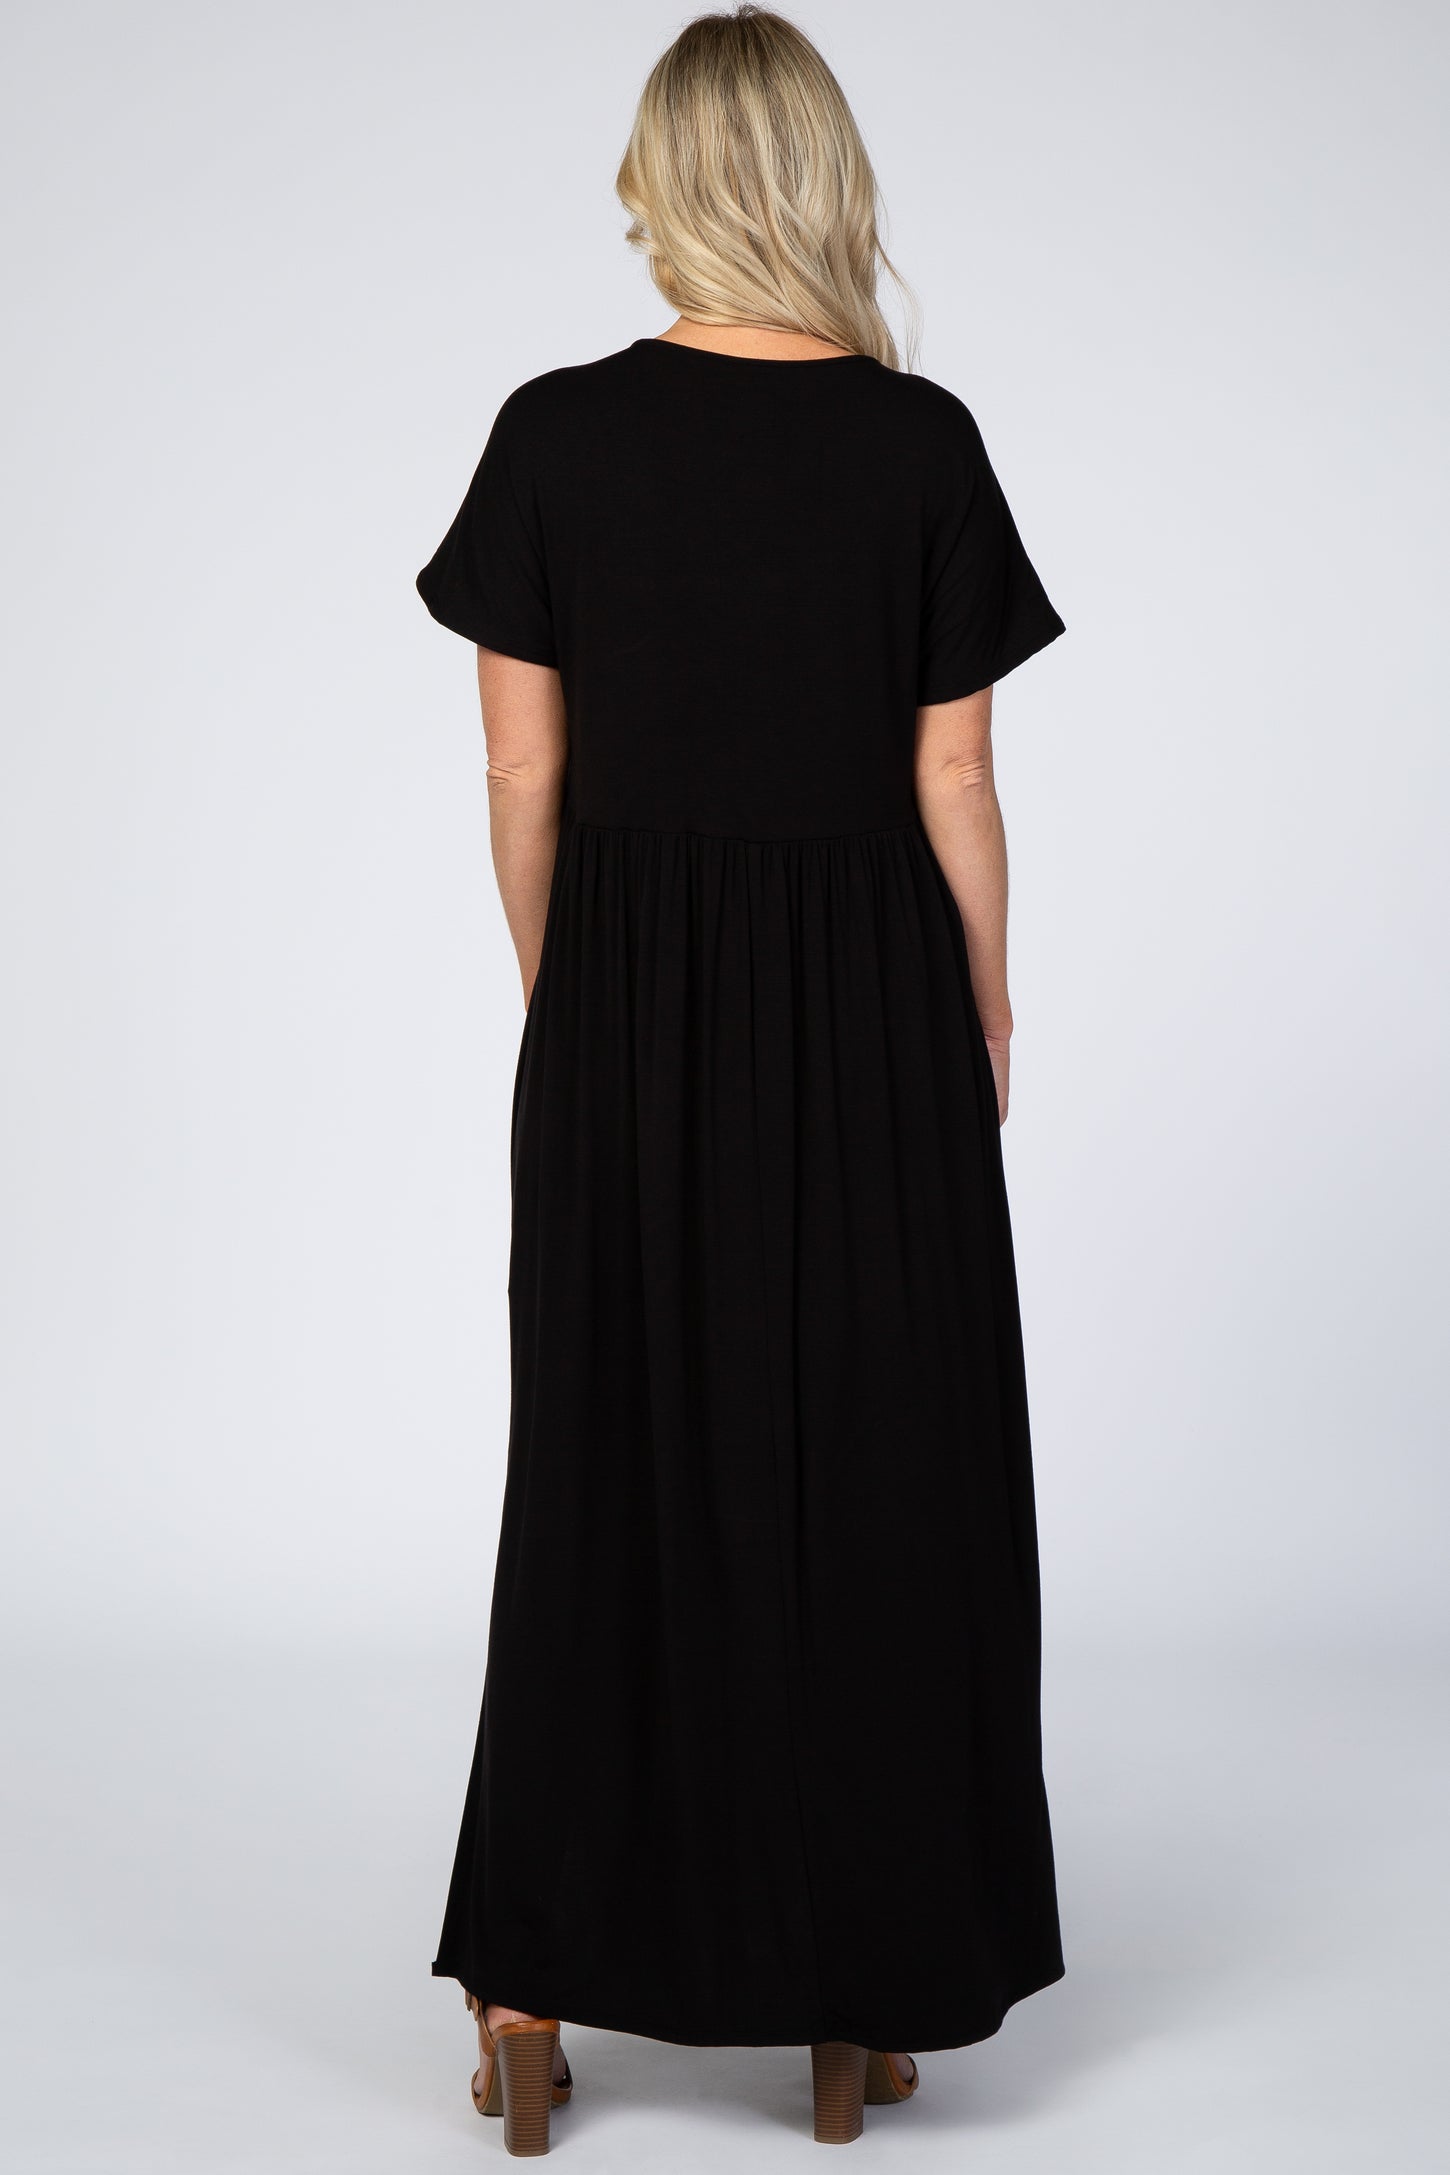 Black Empire Waist Side Slit Maternity Maxi Dress